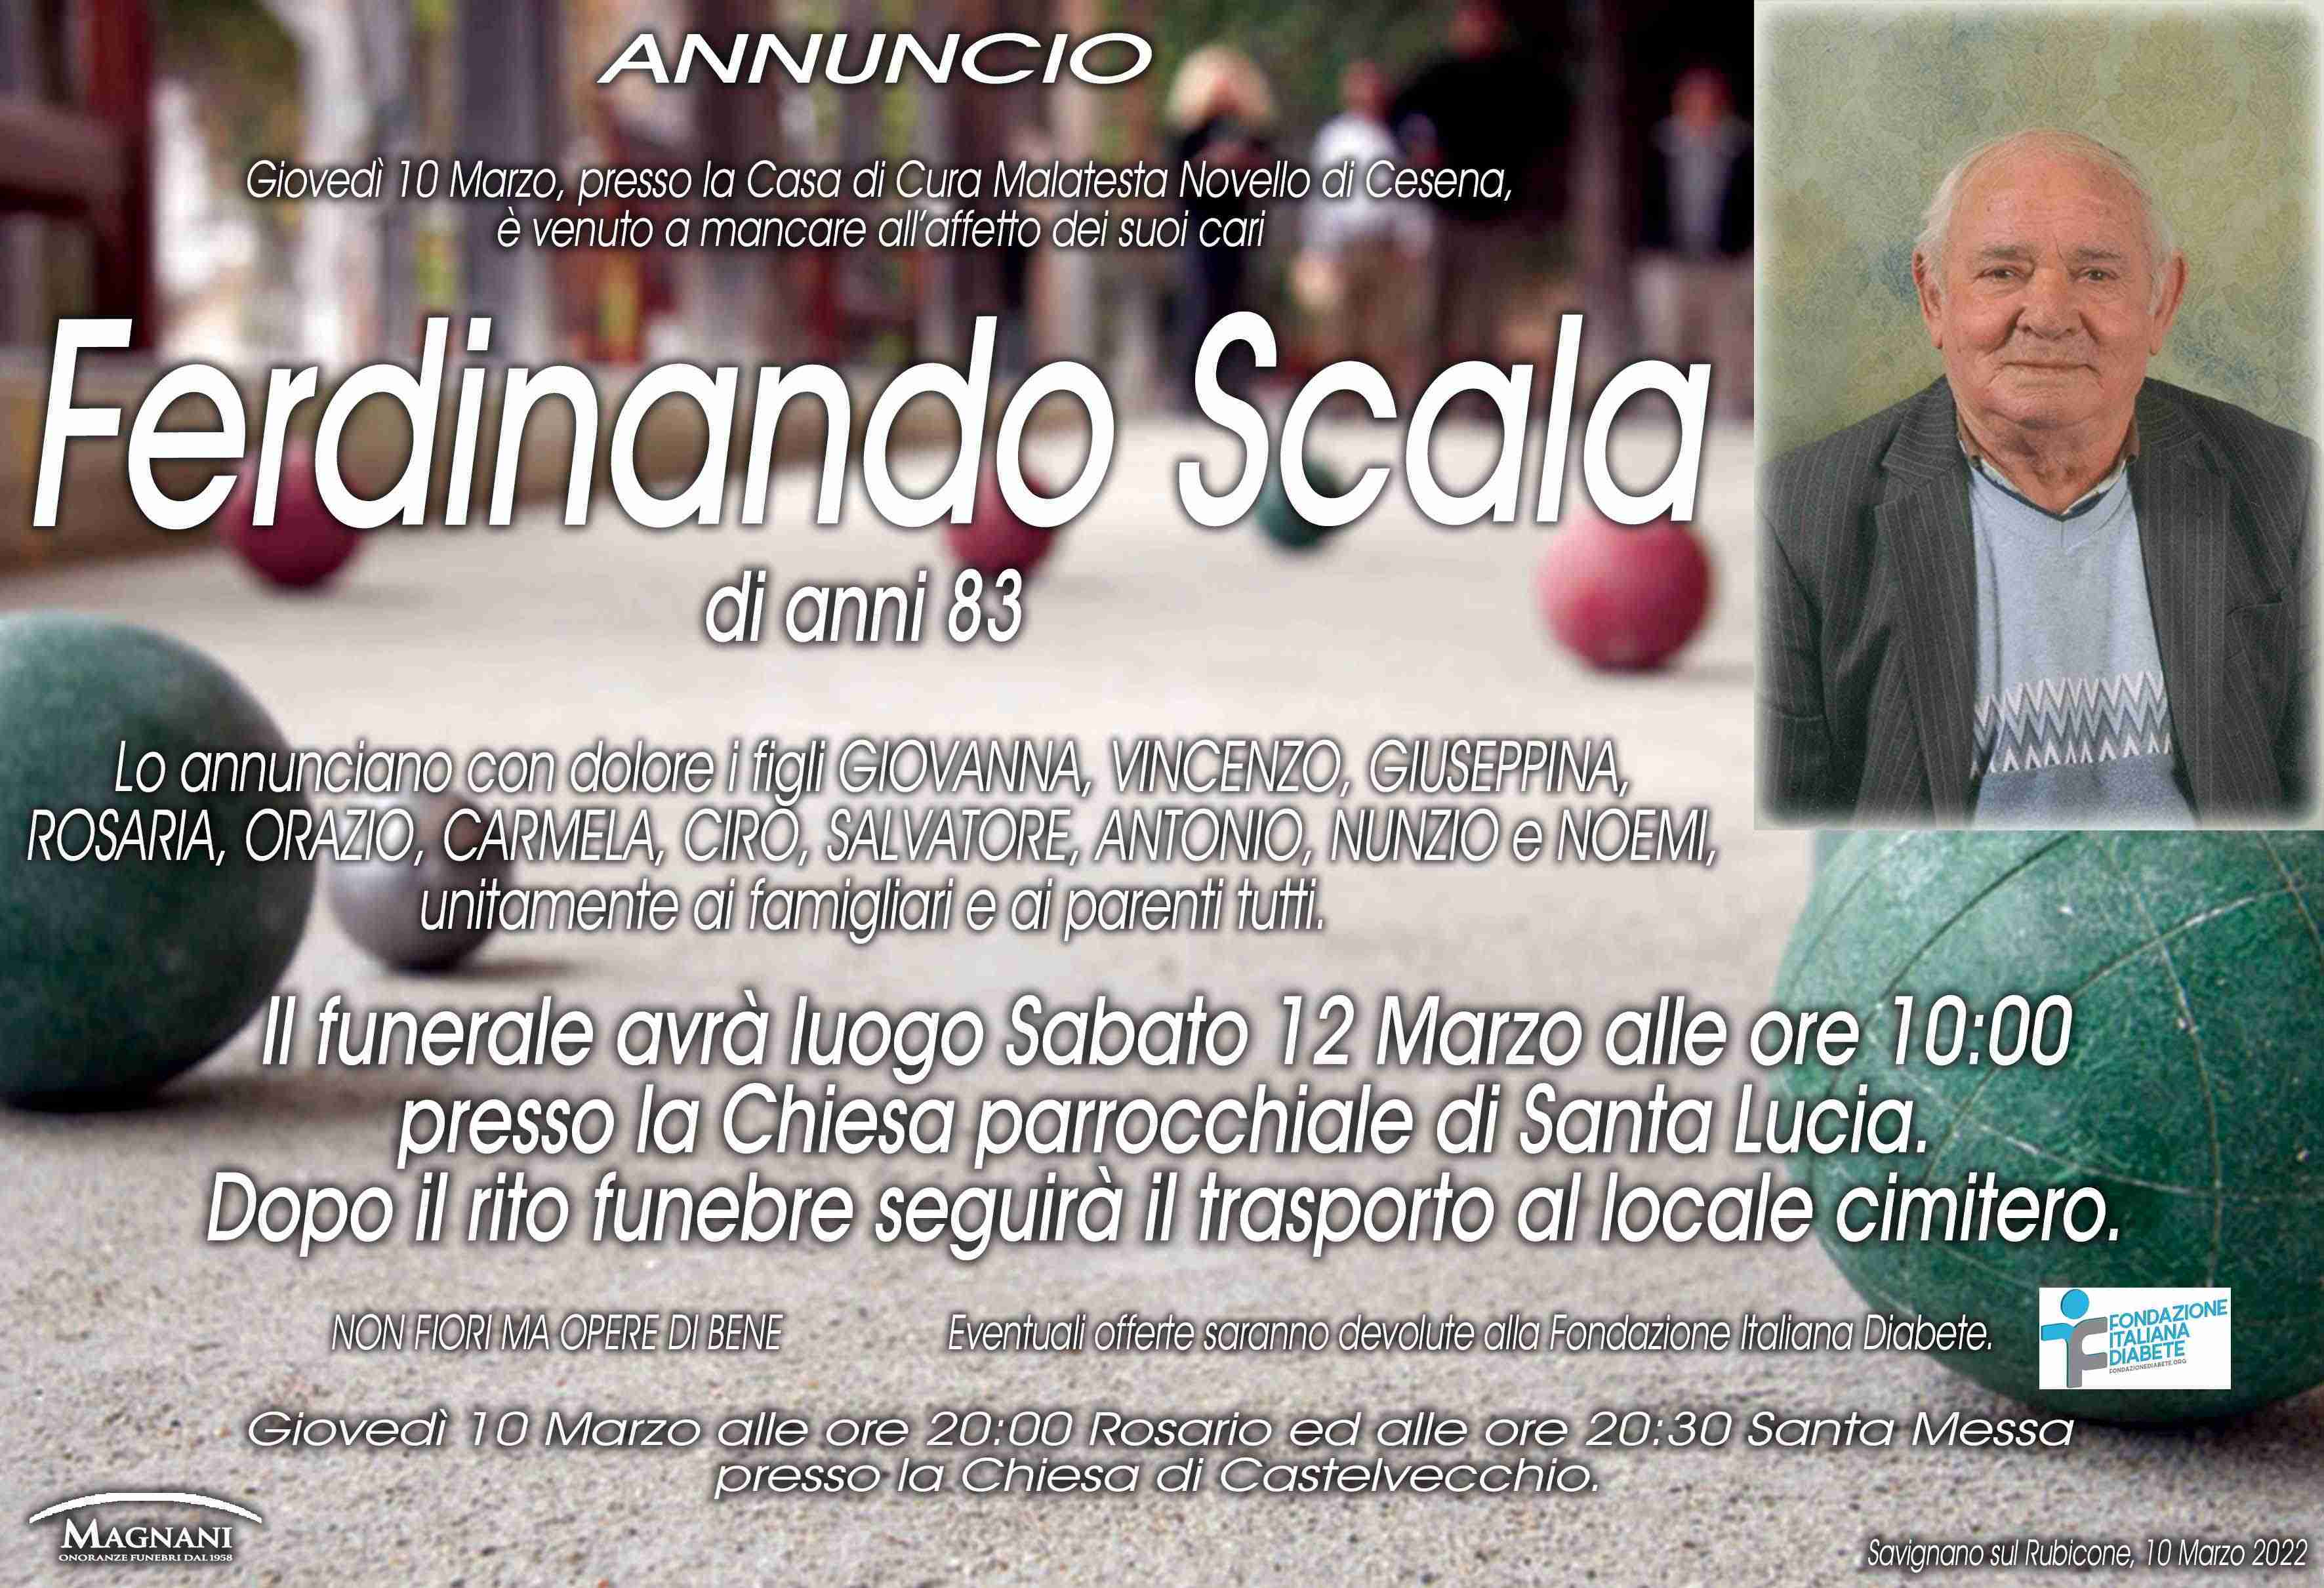 Ferdinando Scala